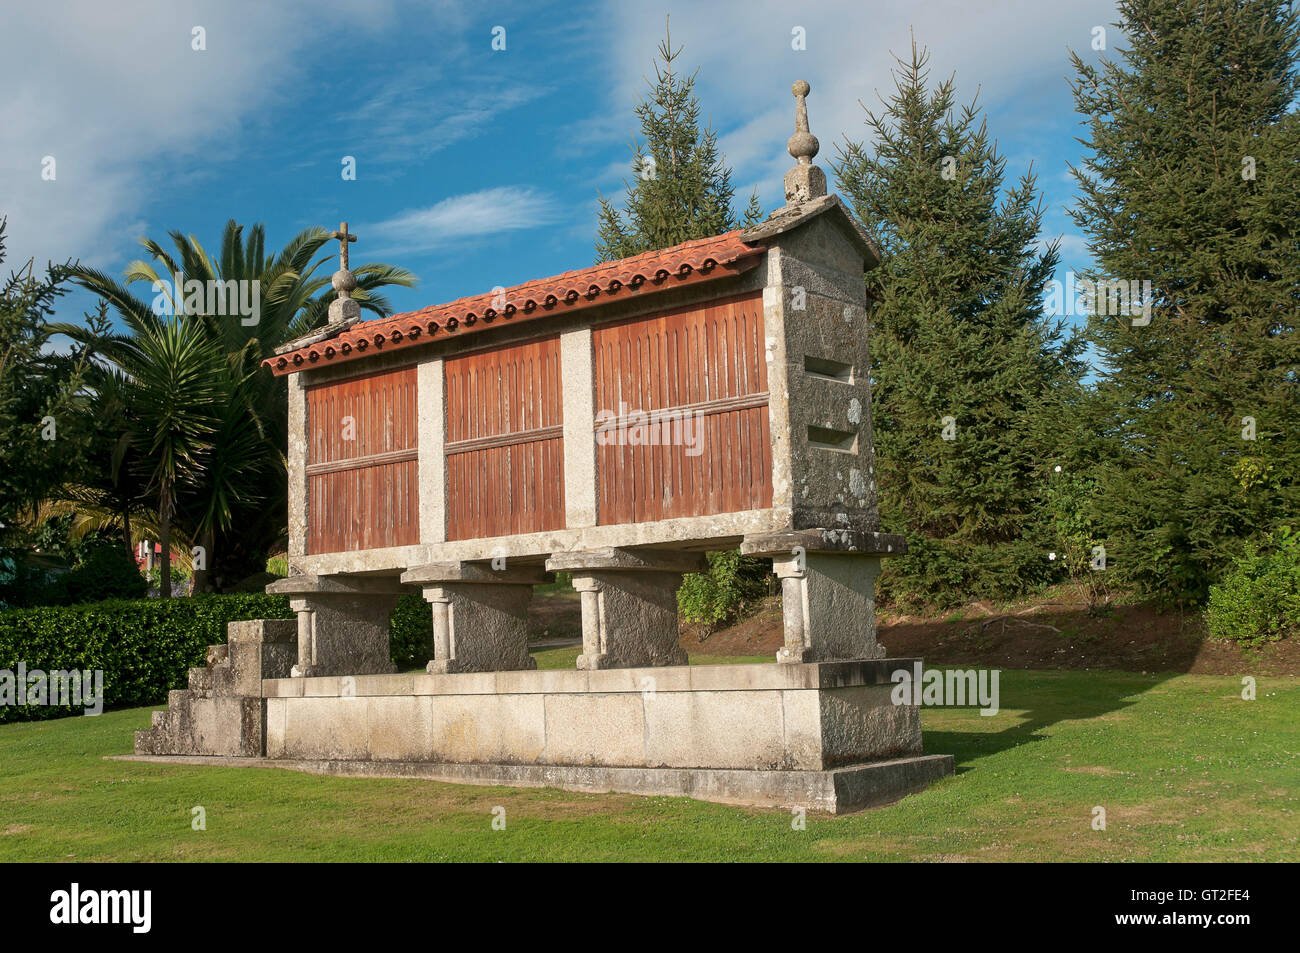 Typical galician granary (Horreo), Betanzos, La Coruña province, Region of Galicia, Spain, Europe Stock Photo